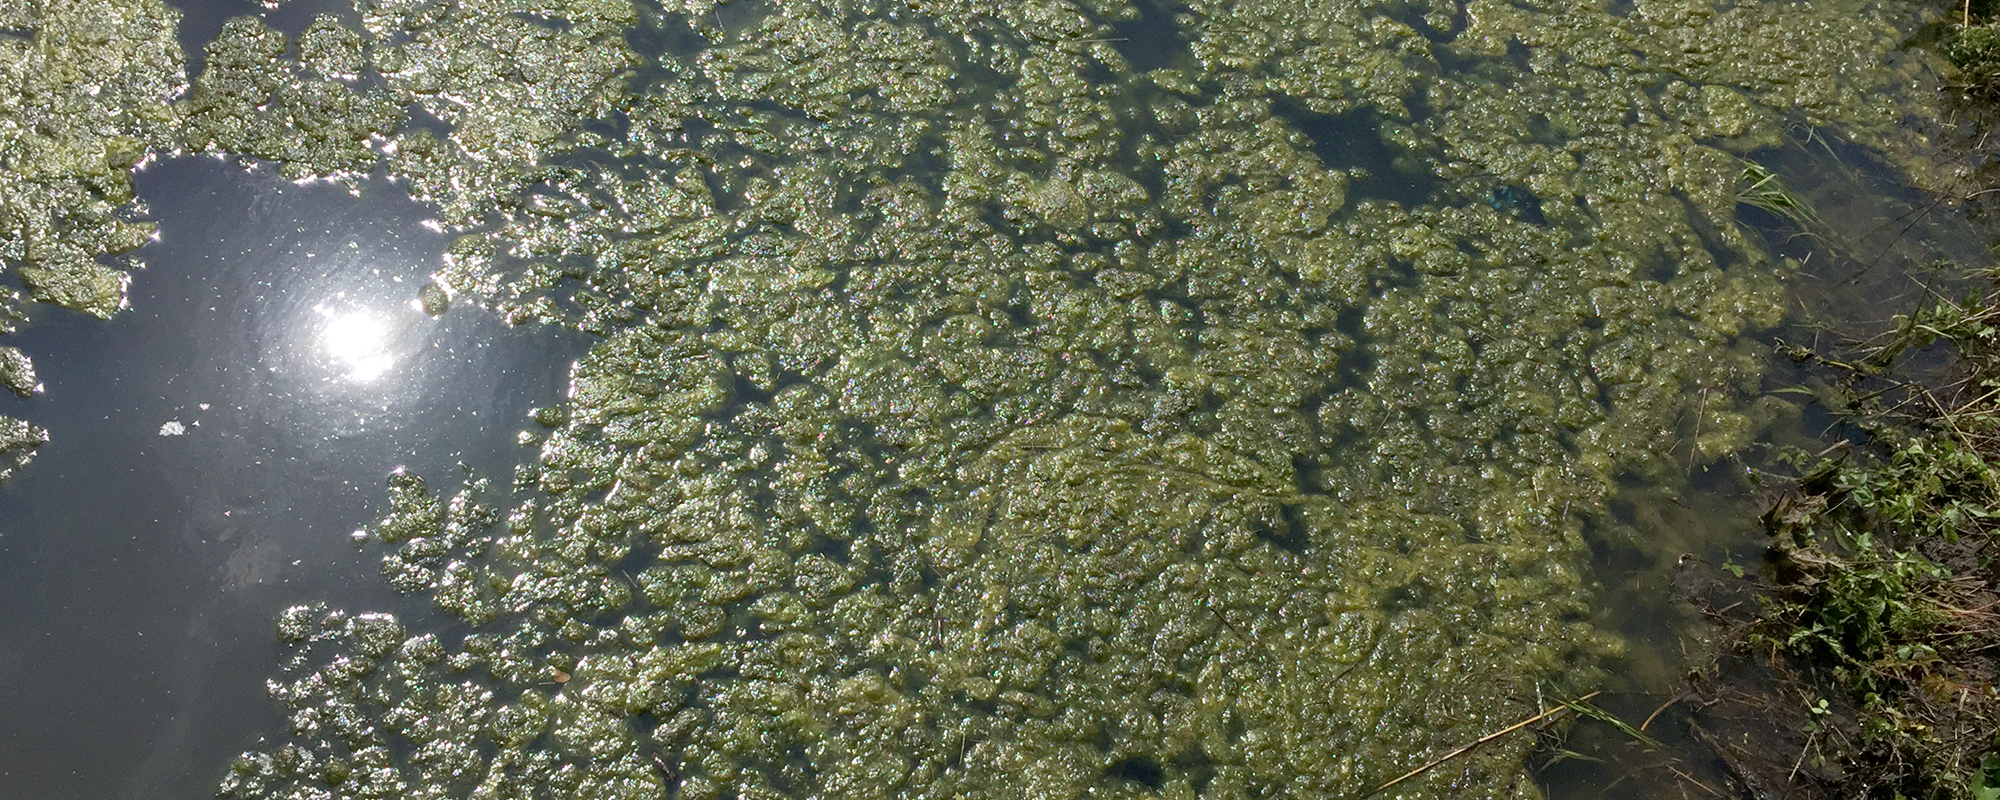 Aquatic Vegetation in Ponds